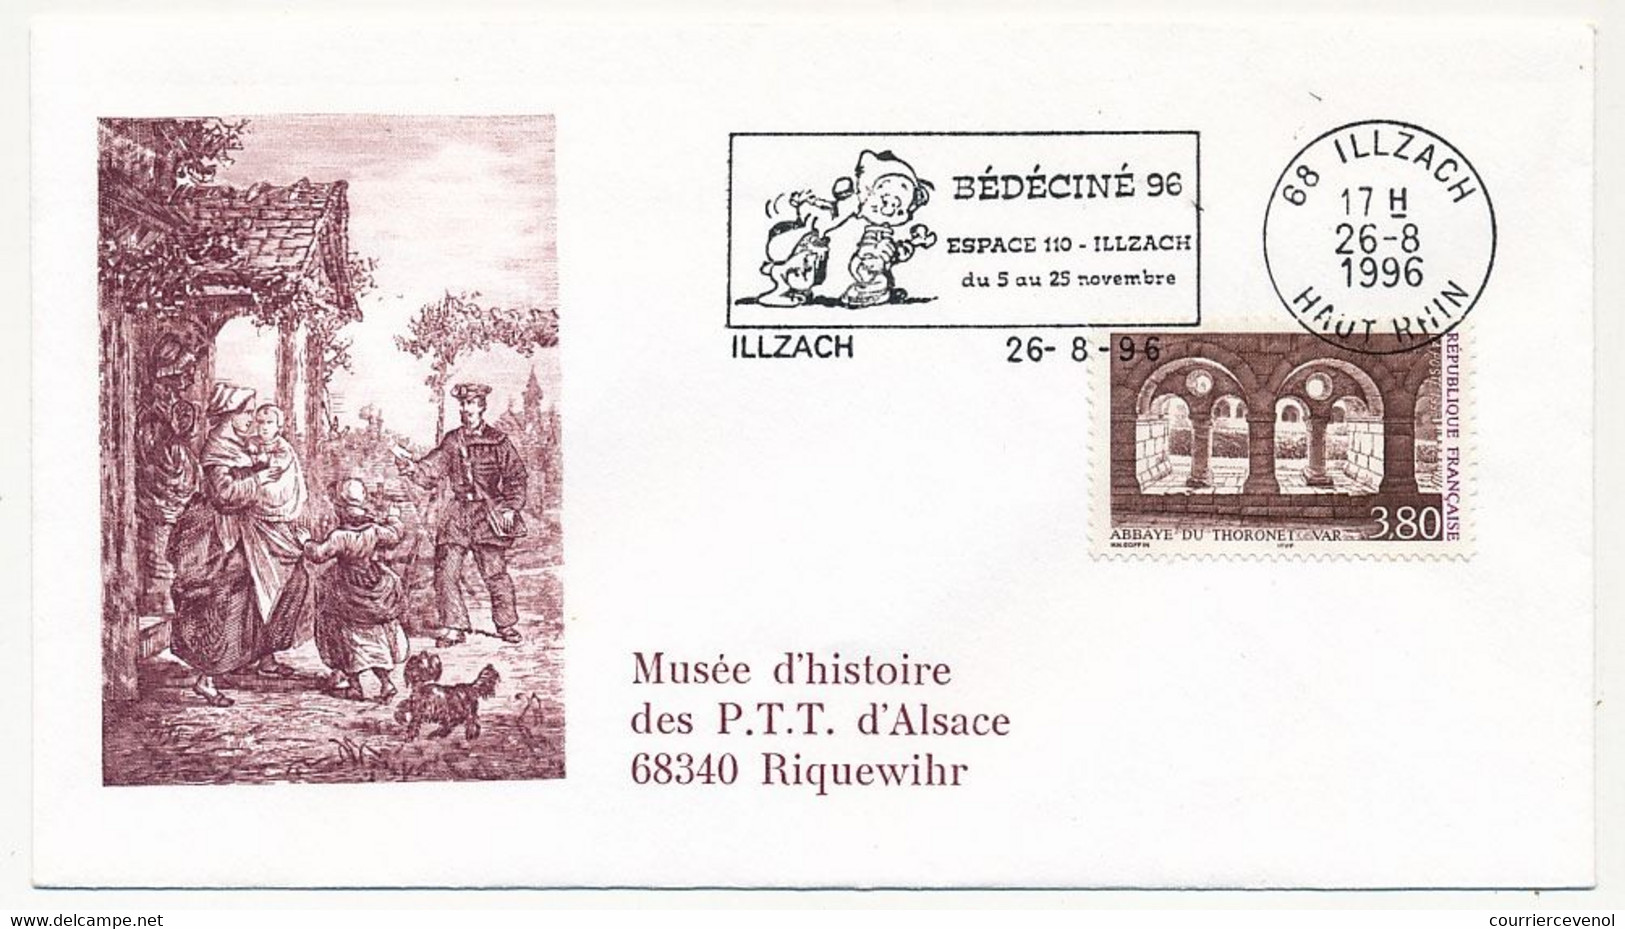 FRANCE - Env  Type FDC - 3,80 Abbaye Thoronet - OMEC BEDECINE 96 - Ilzach (Haut Rhin) - 26/8/1996 - Oblitérations Mécaniques (flammes)